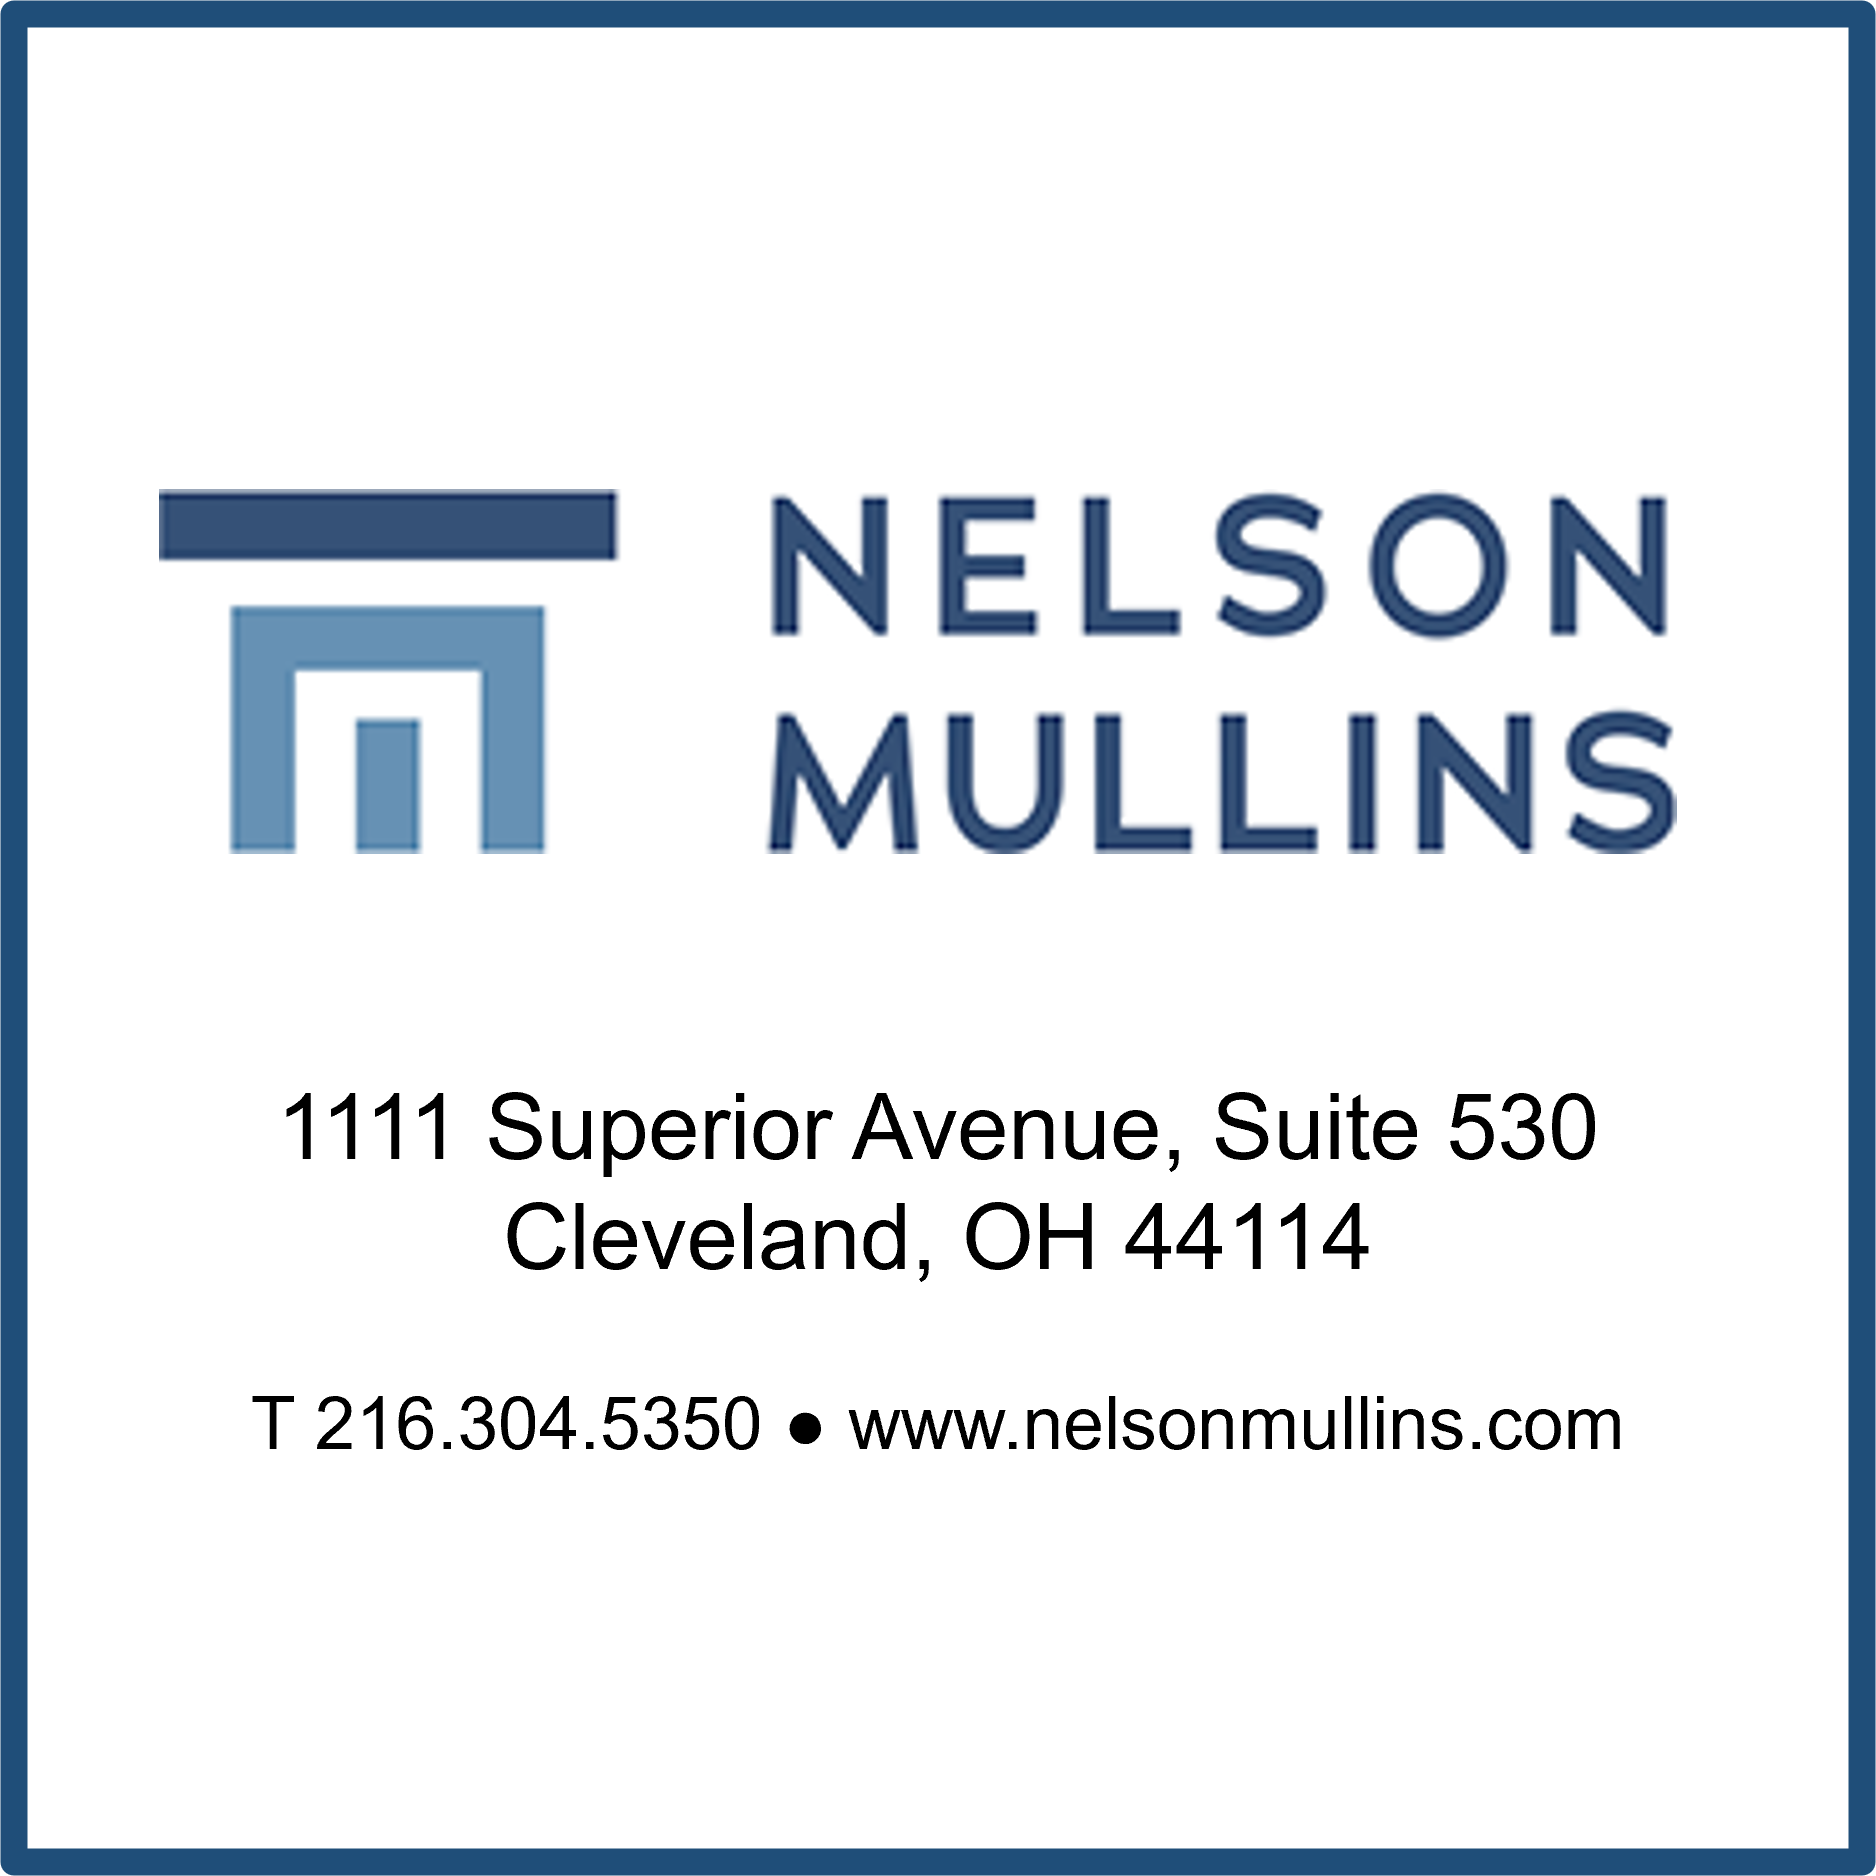 Nelson Mullins ad